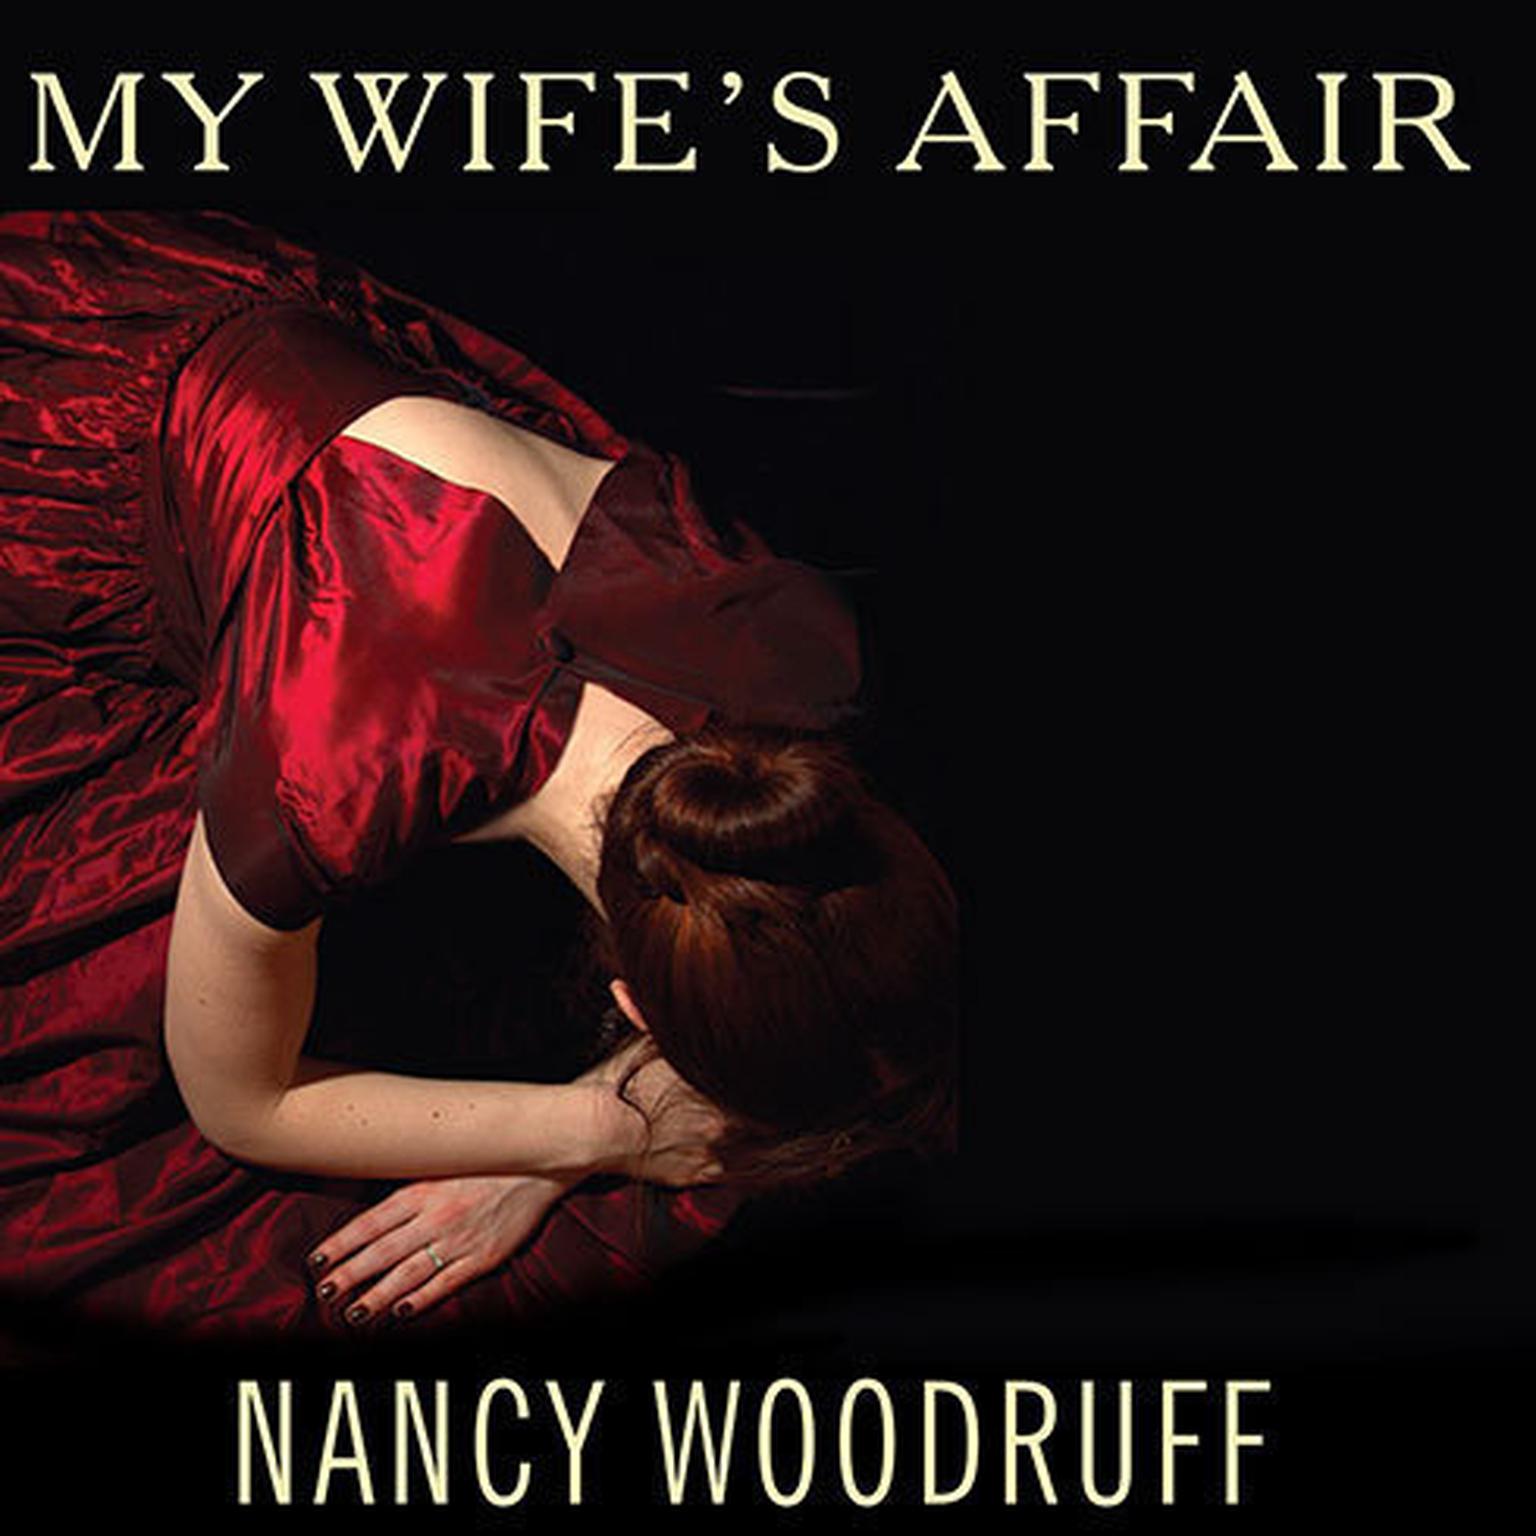 My Wifes Affair: A Novel Audiobook, by Nancy Woodruff